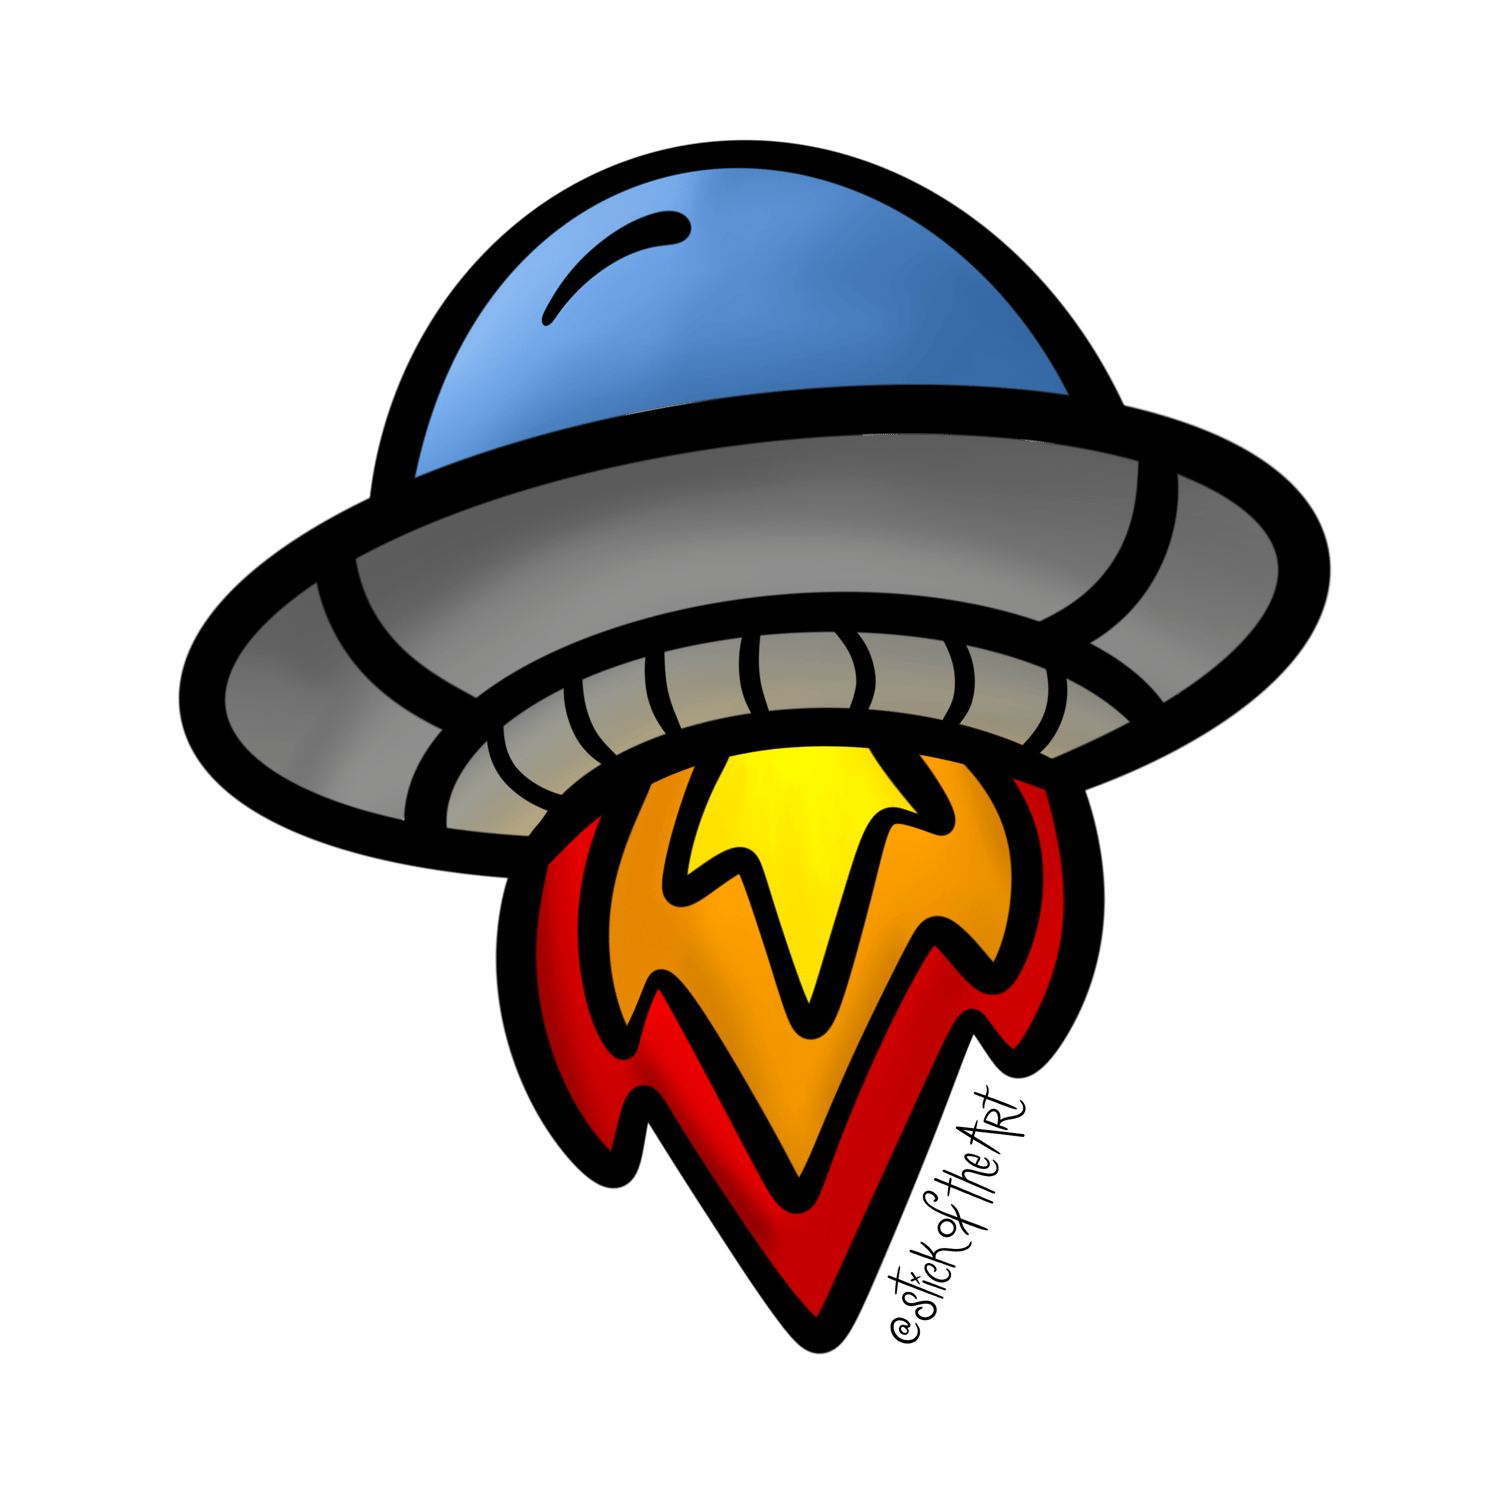 UFO - Sticker